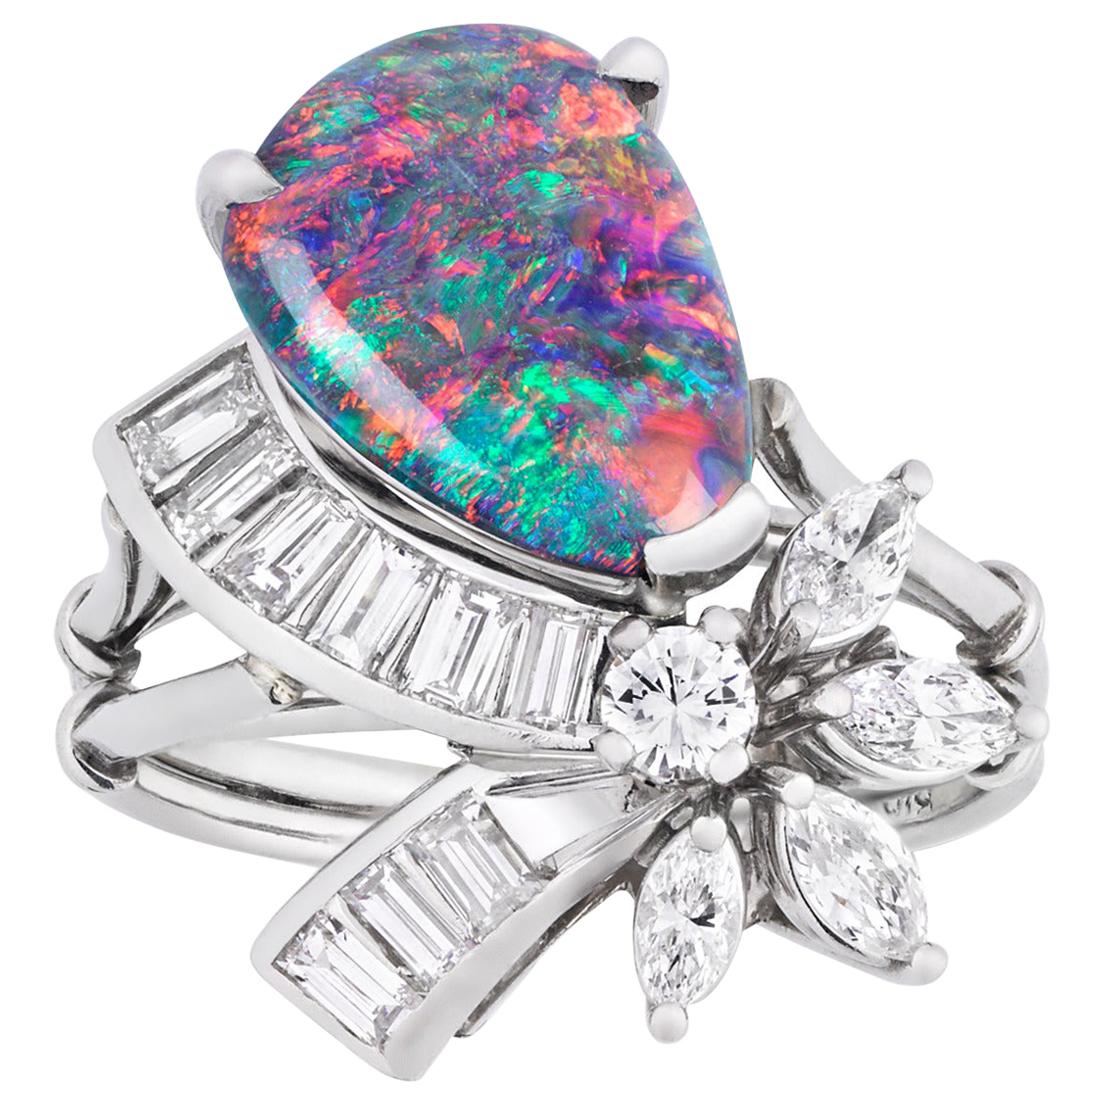 Black Opal and Diamond Ring, 1.77 Carat